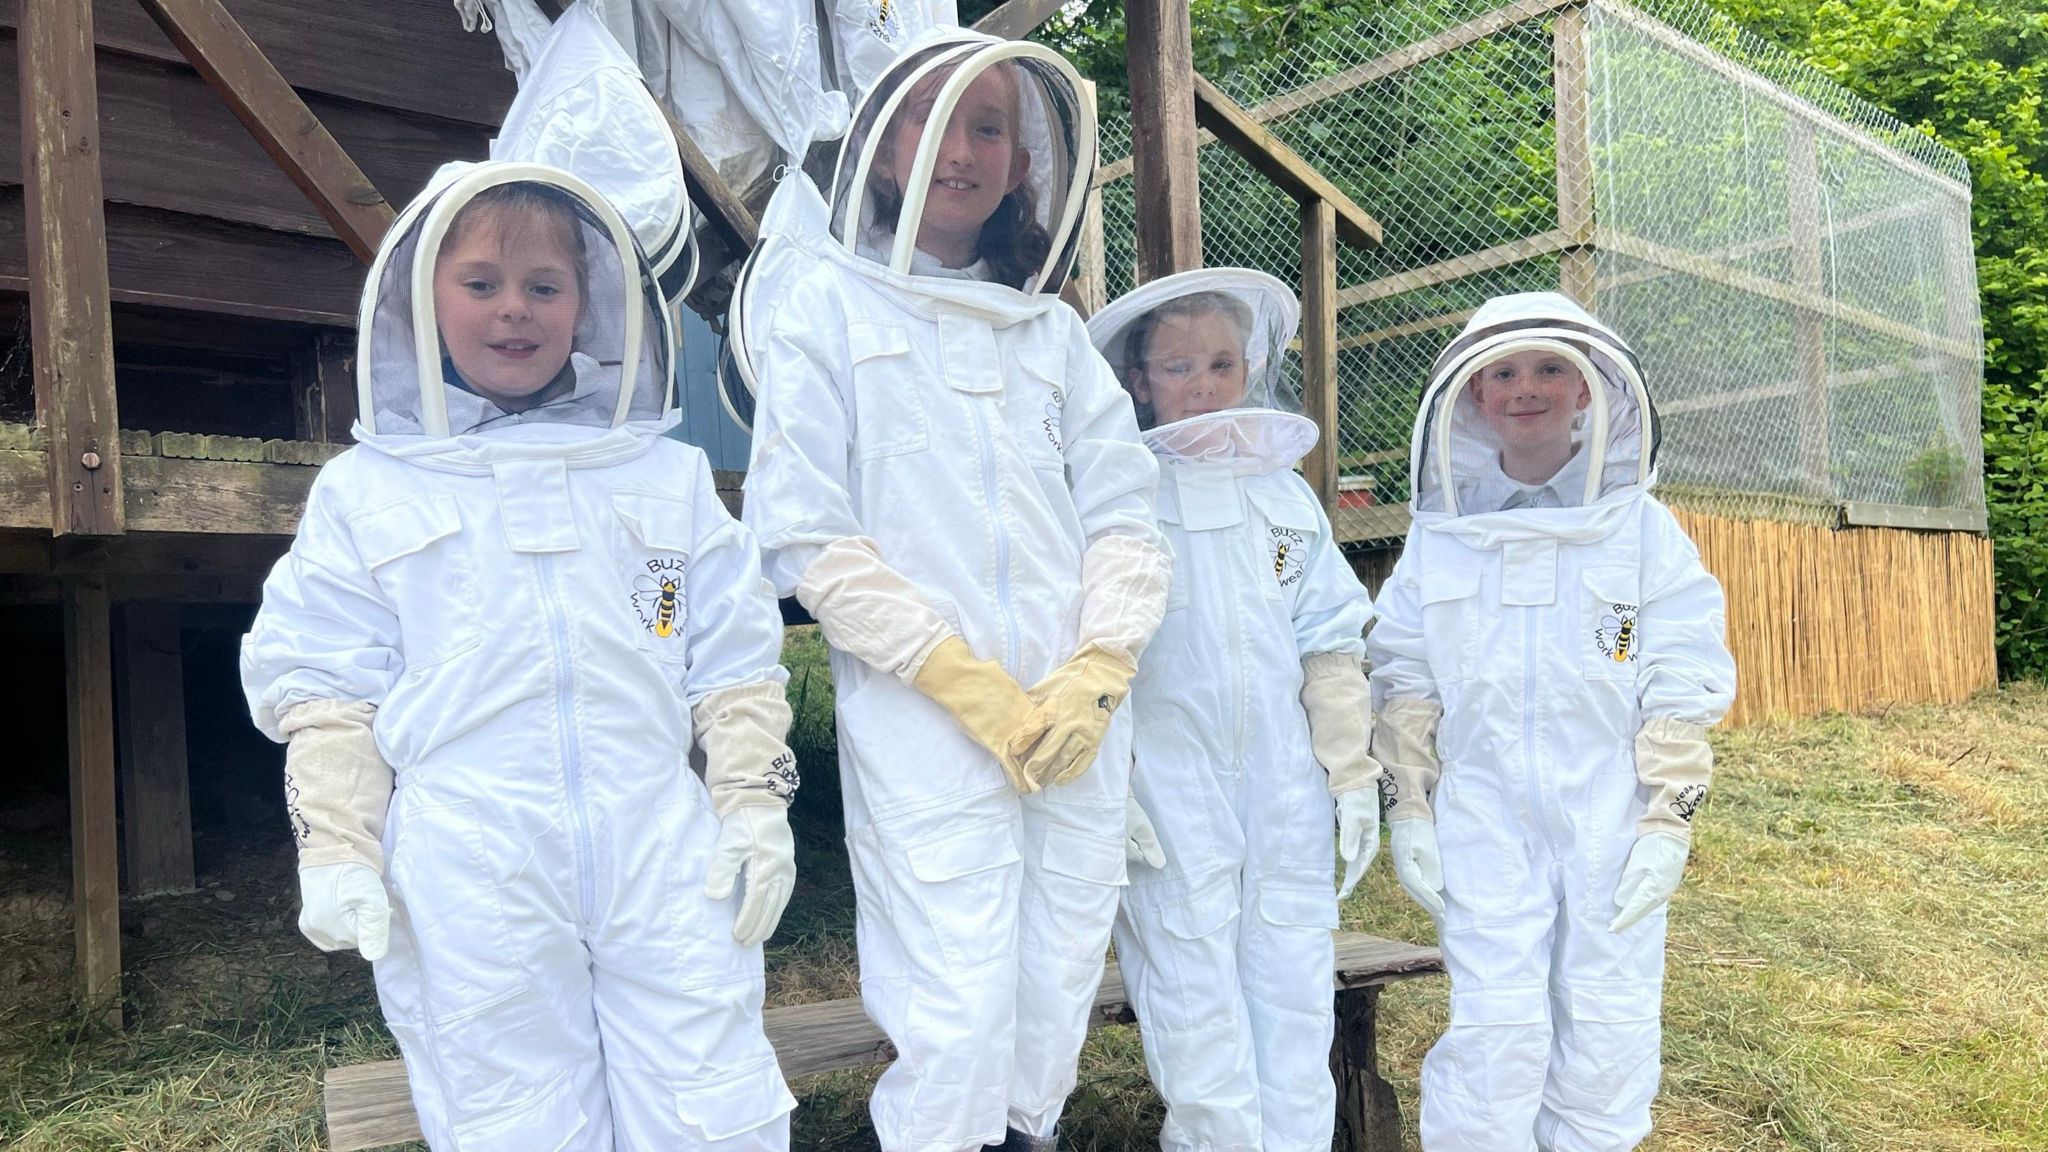 Mini beekeepers at Ernesettle Community School